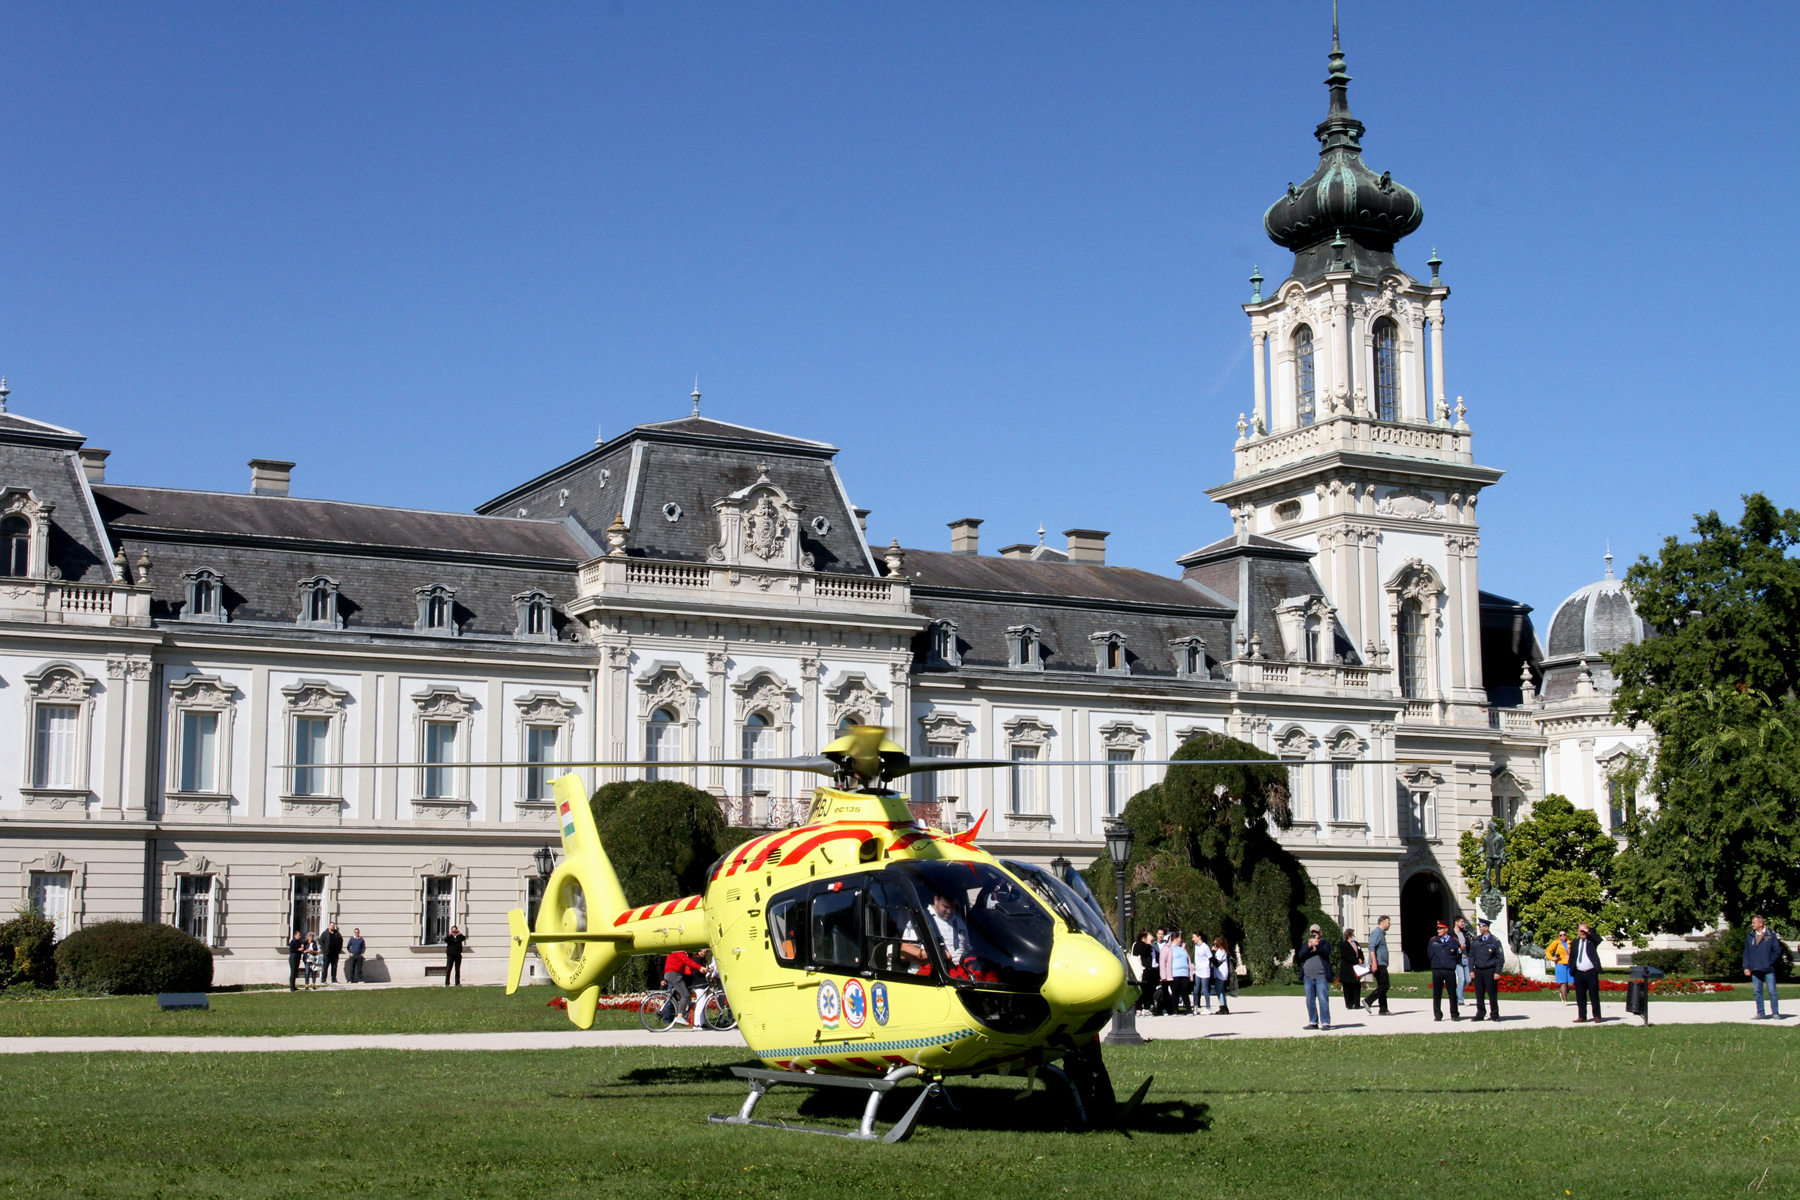 Légimentő helikopter landolt a kastélyparkban